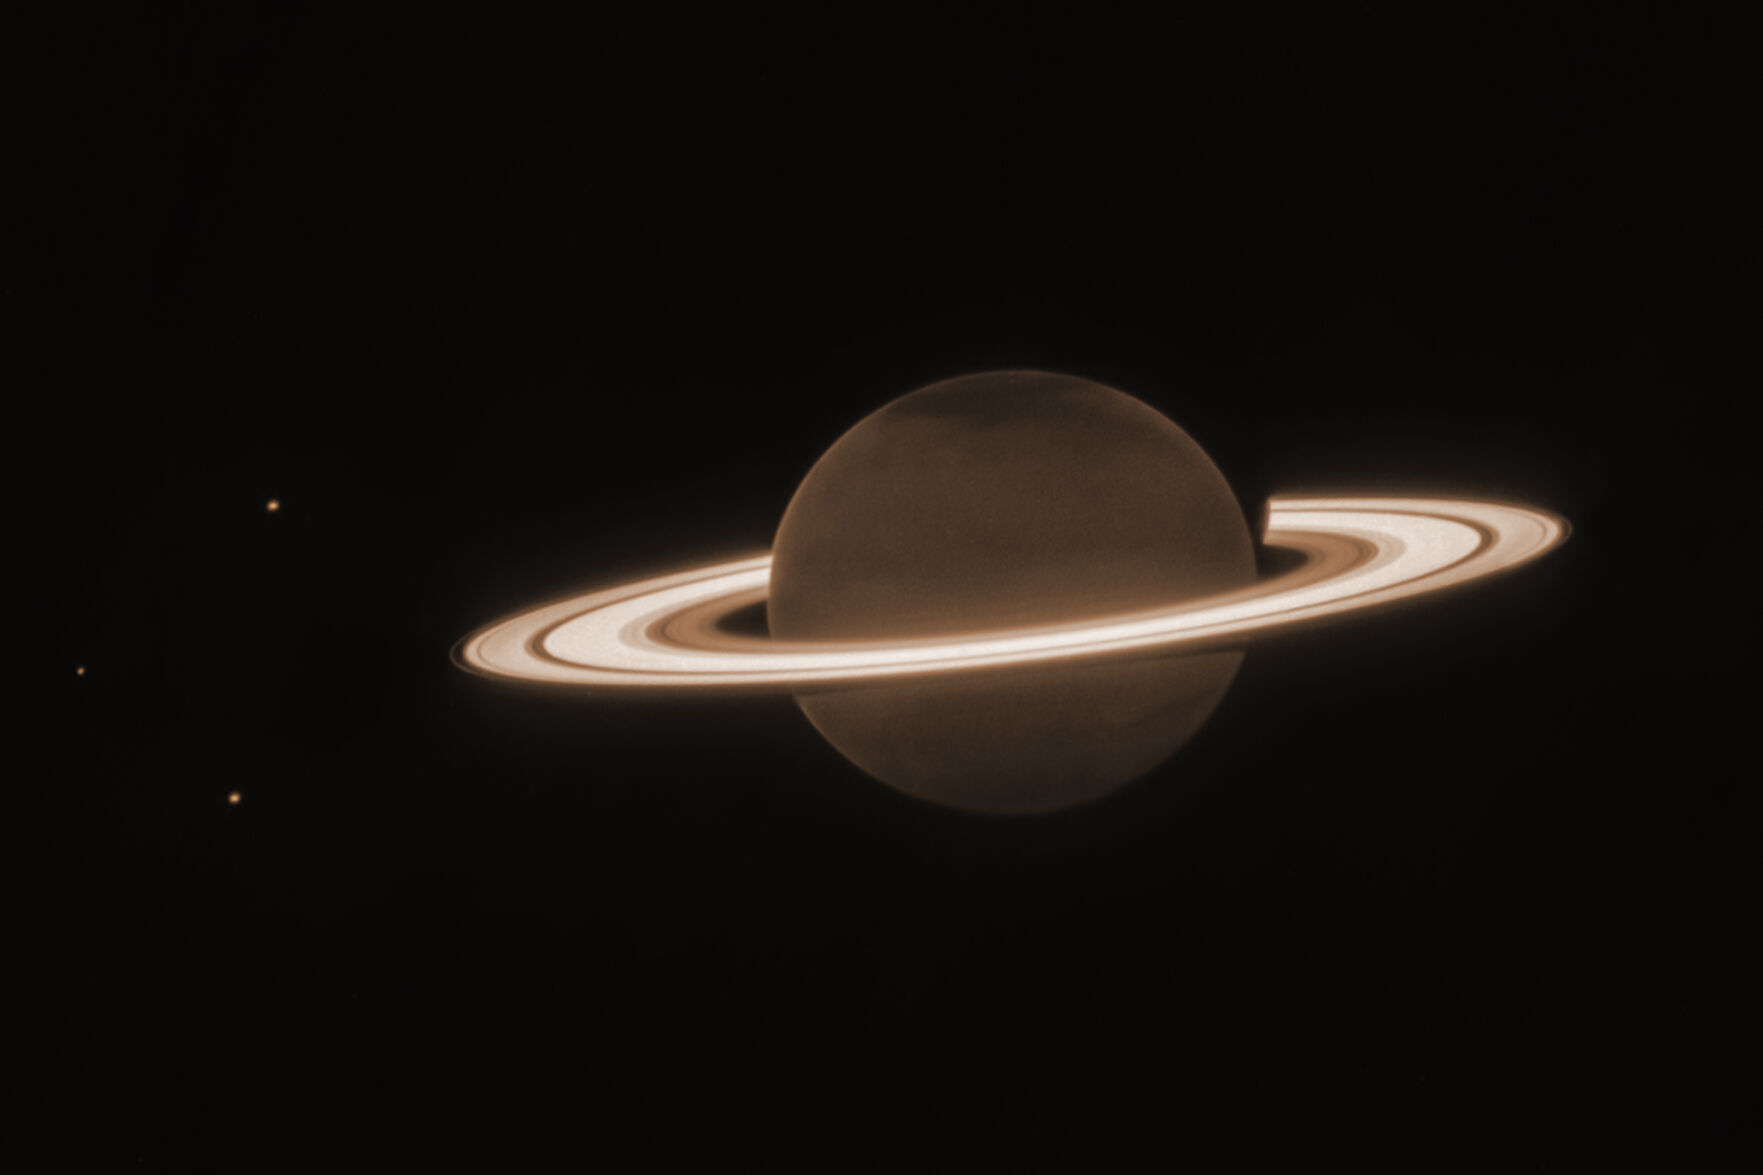 Saturn struts its ringed glory | Astronomy.com